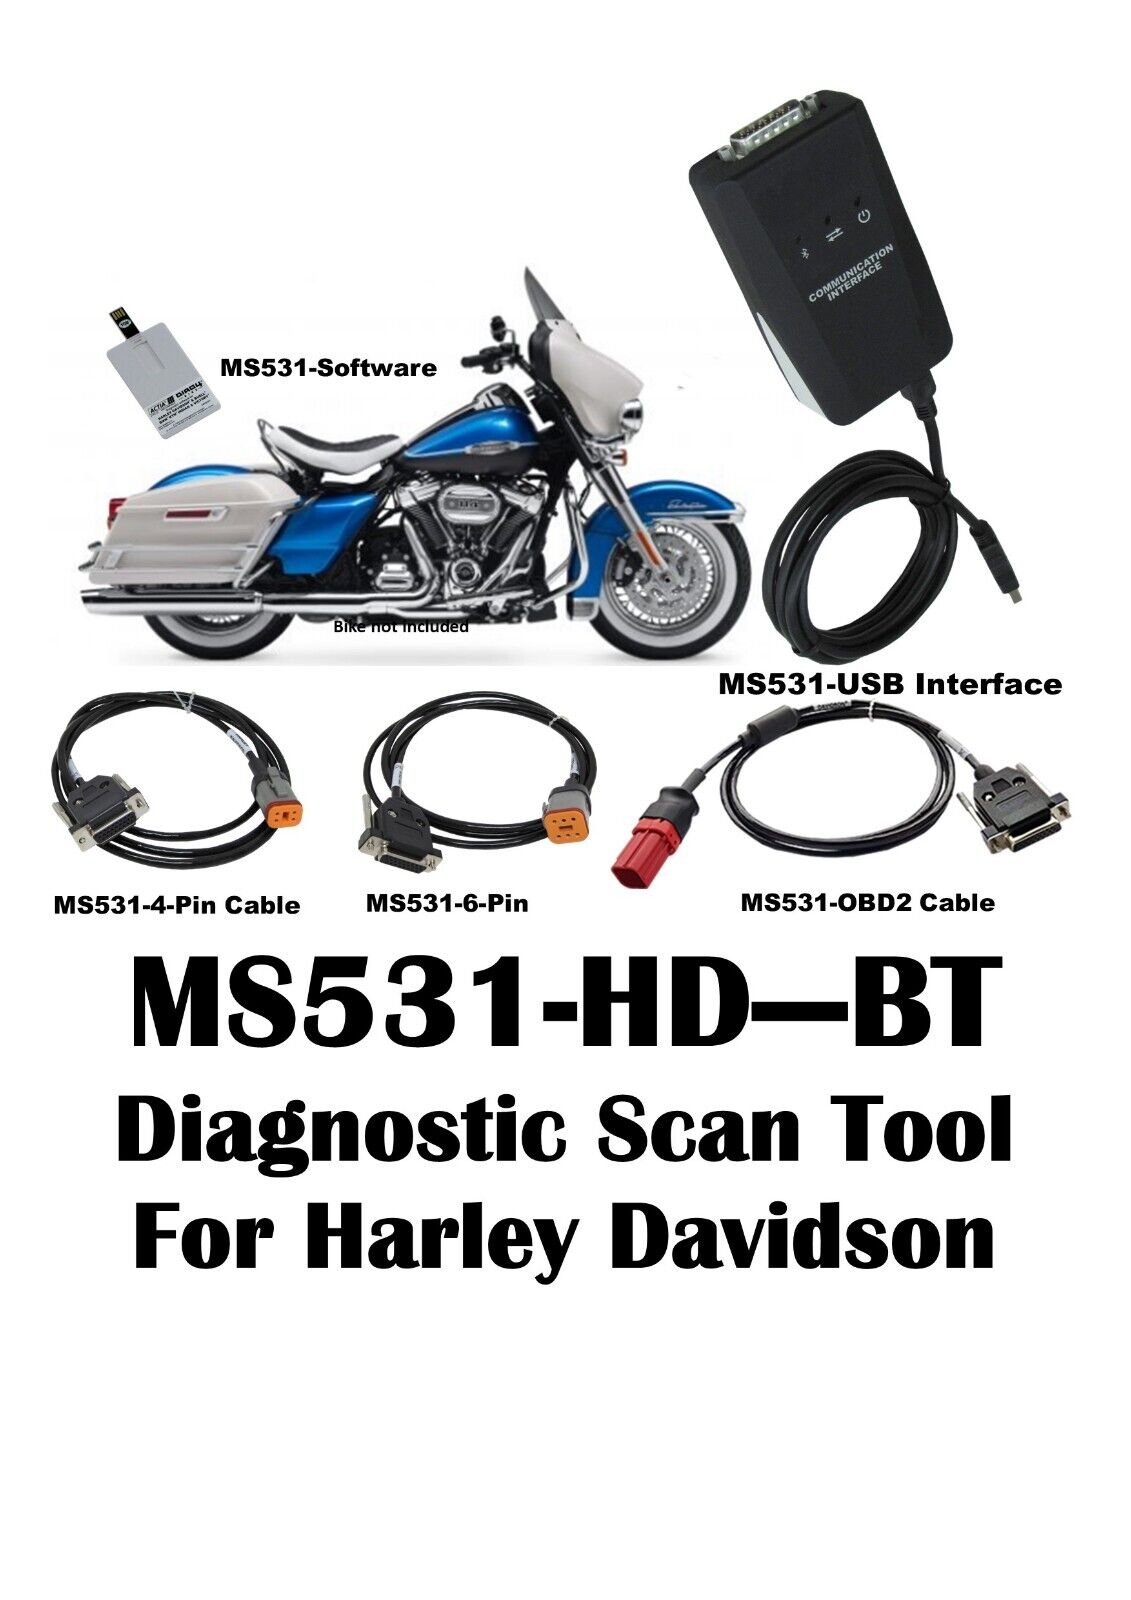 Diag4Bike Harley Davidson Diagnostic Scanner AT 531 5091 w/Bluetooth Interface